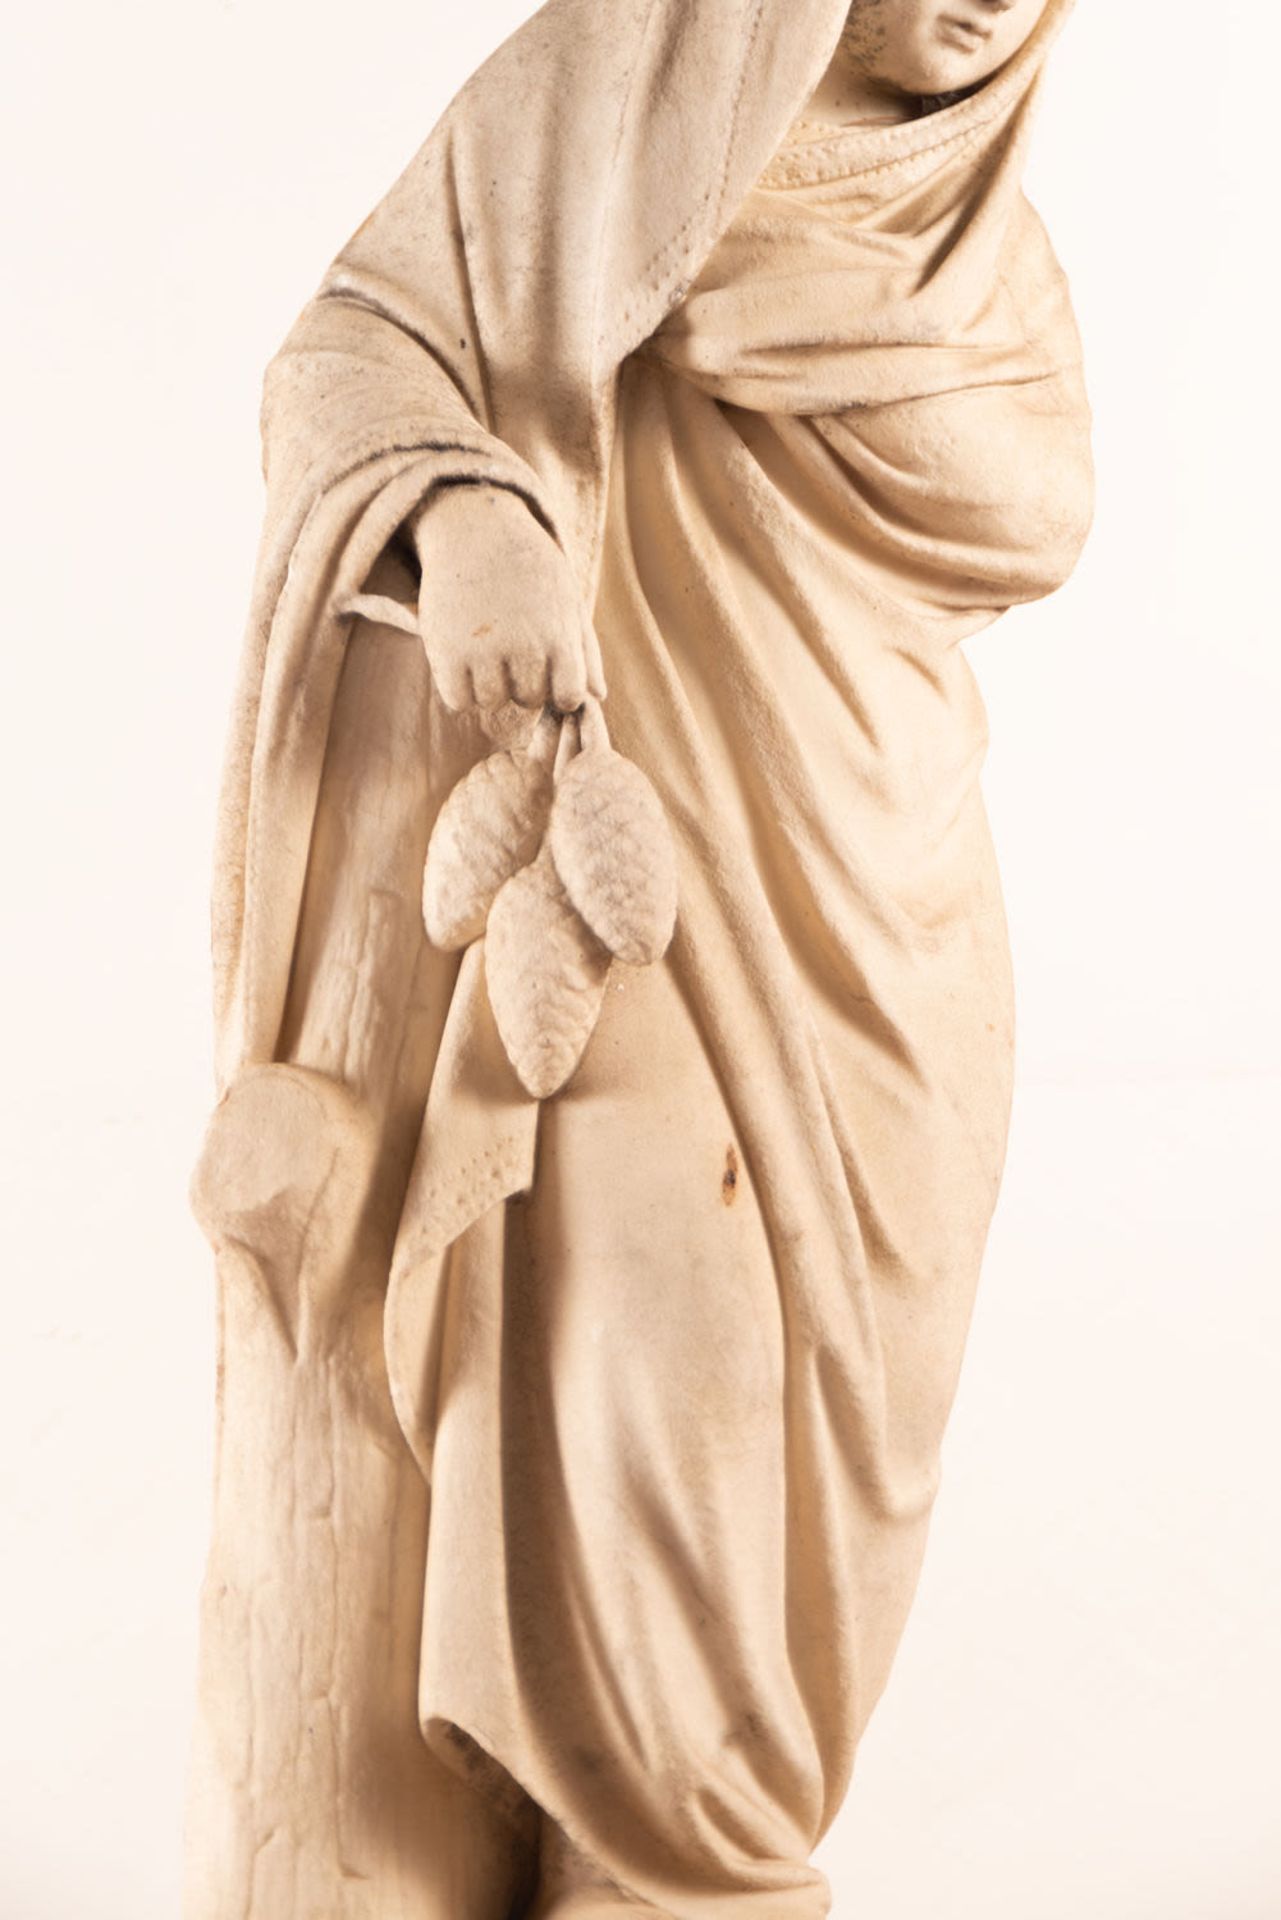 Marble figure of a Samaritan, France, 18th century - Image 11 of 12